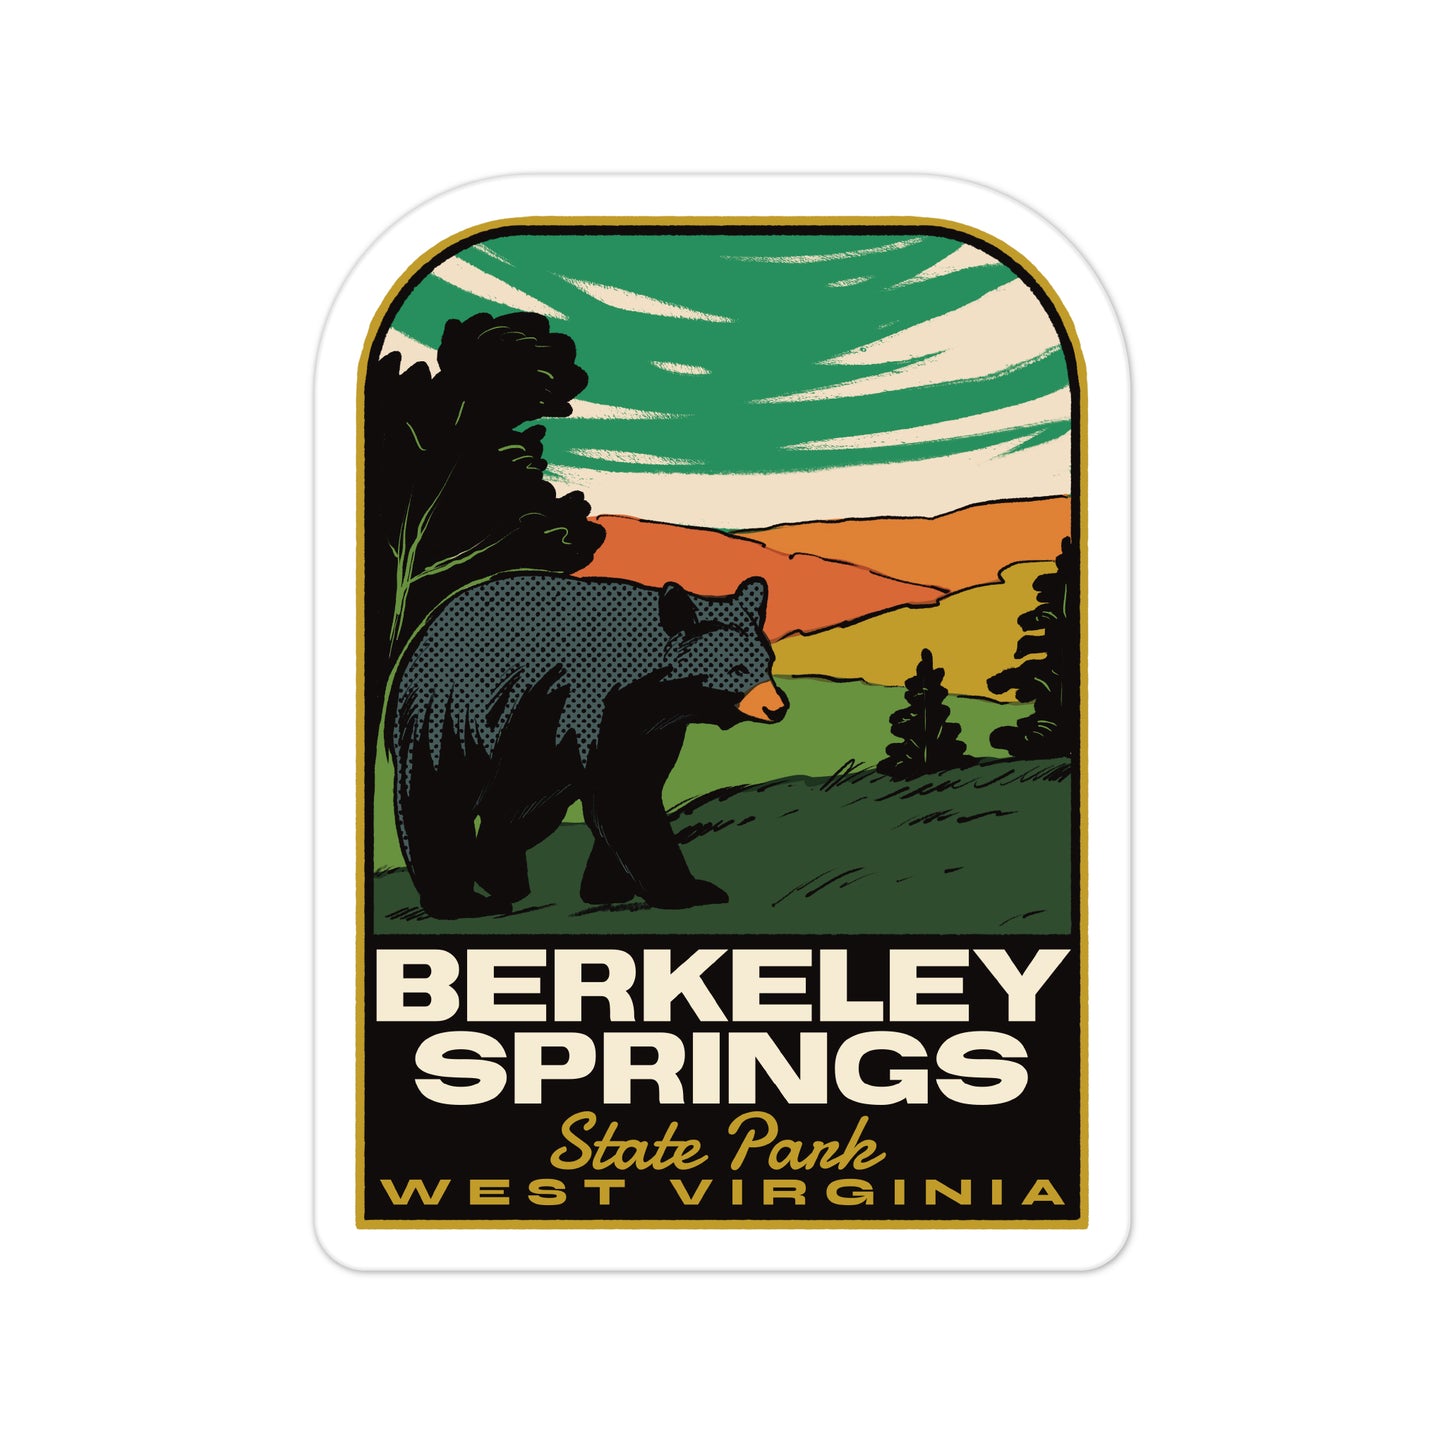 A sticker of Berkeley Springs State Park